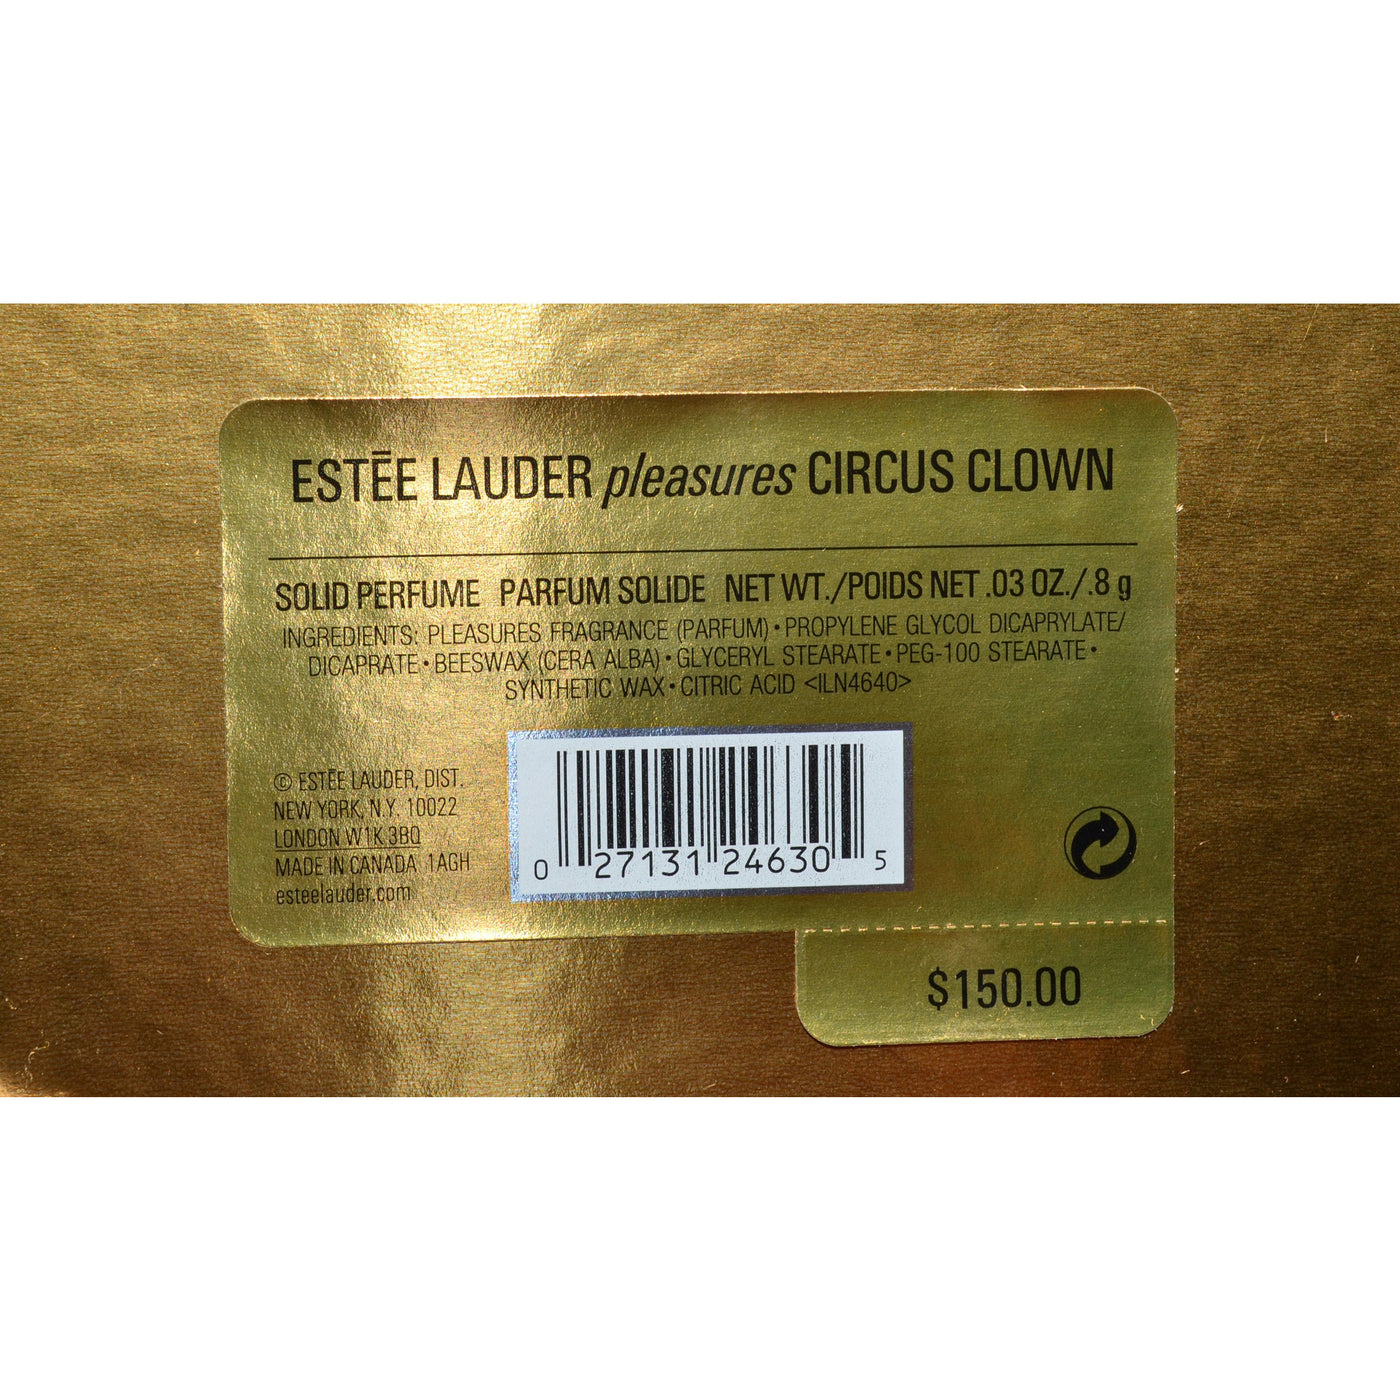 Estee Lauder Pleasures Circus Clown Perfume Compact 2001